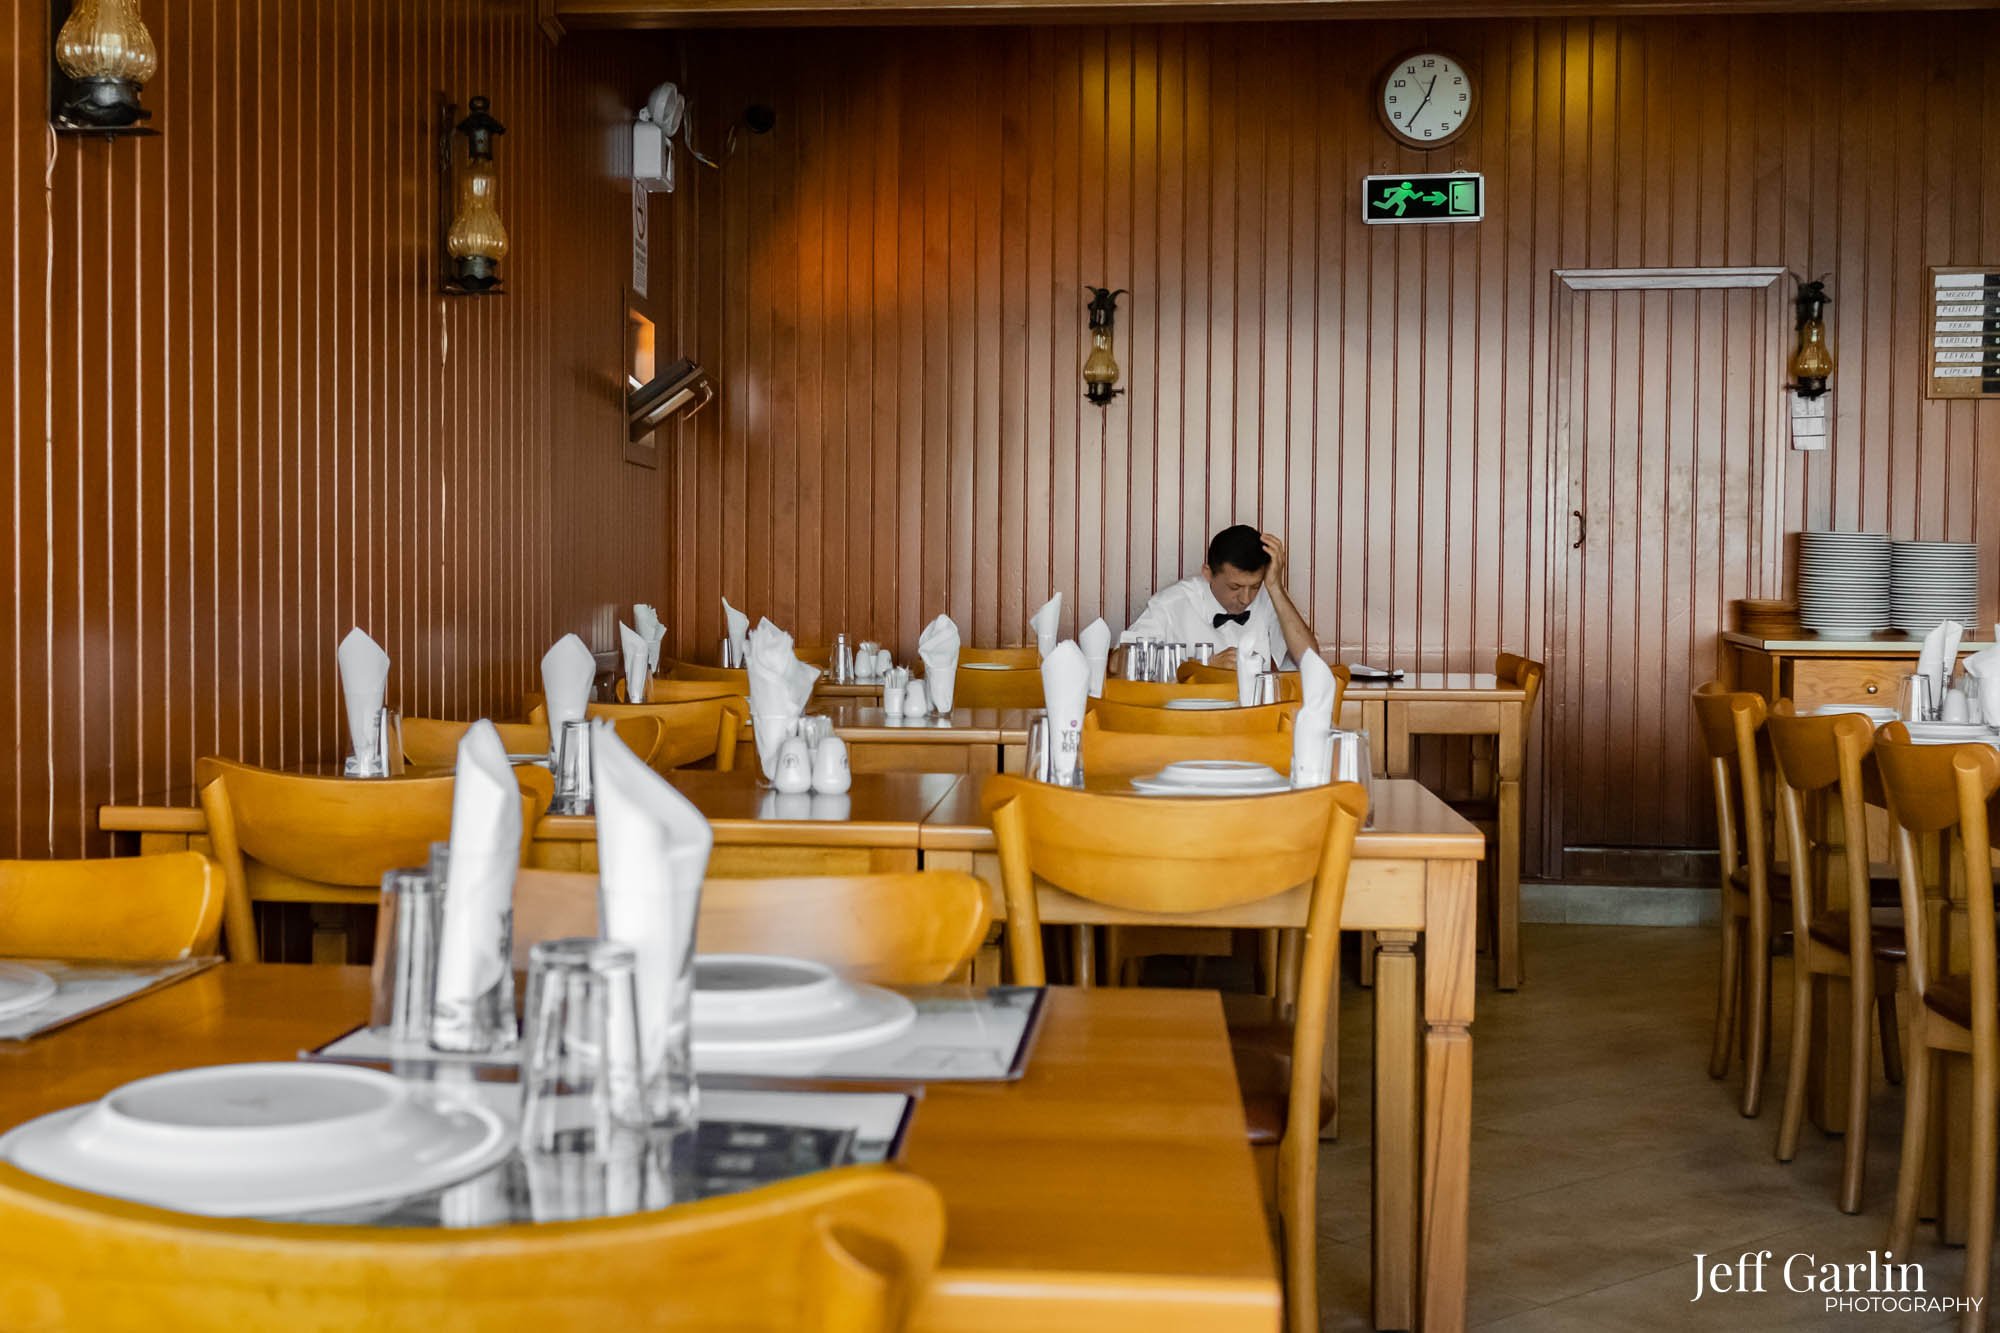 07 The lonliest Waiter in Istanbul.jpg